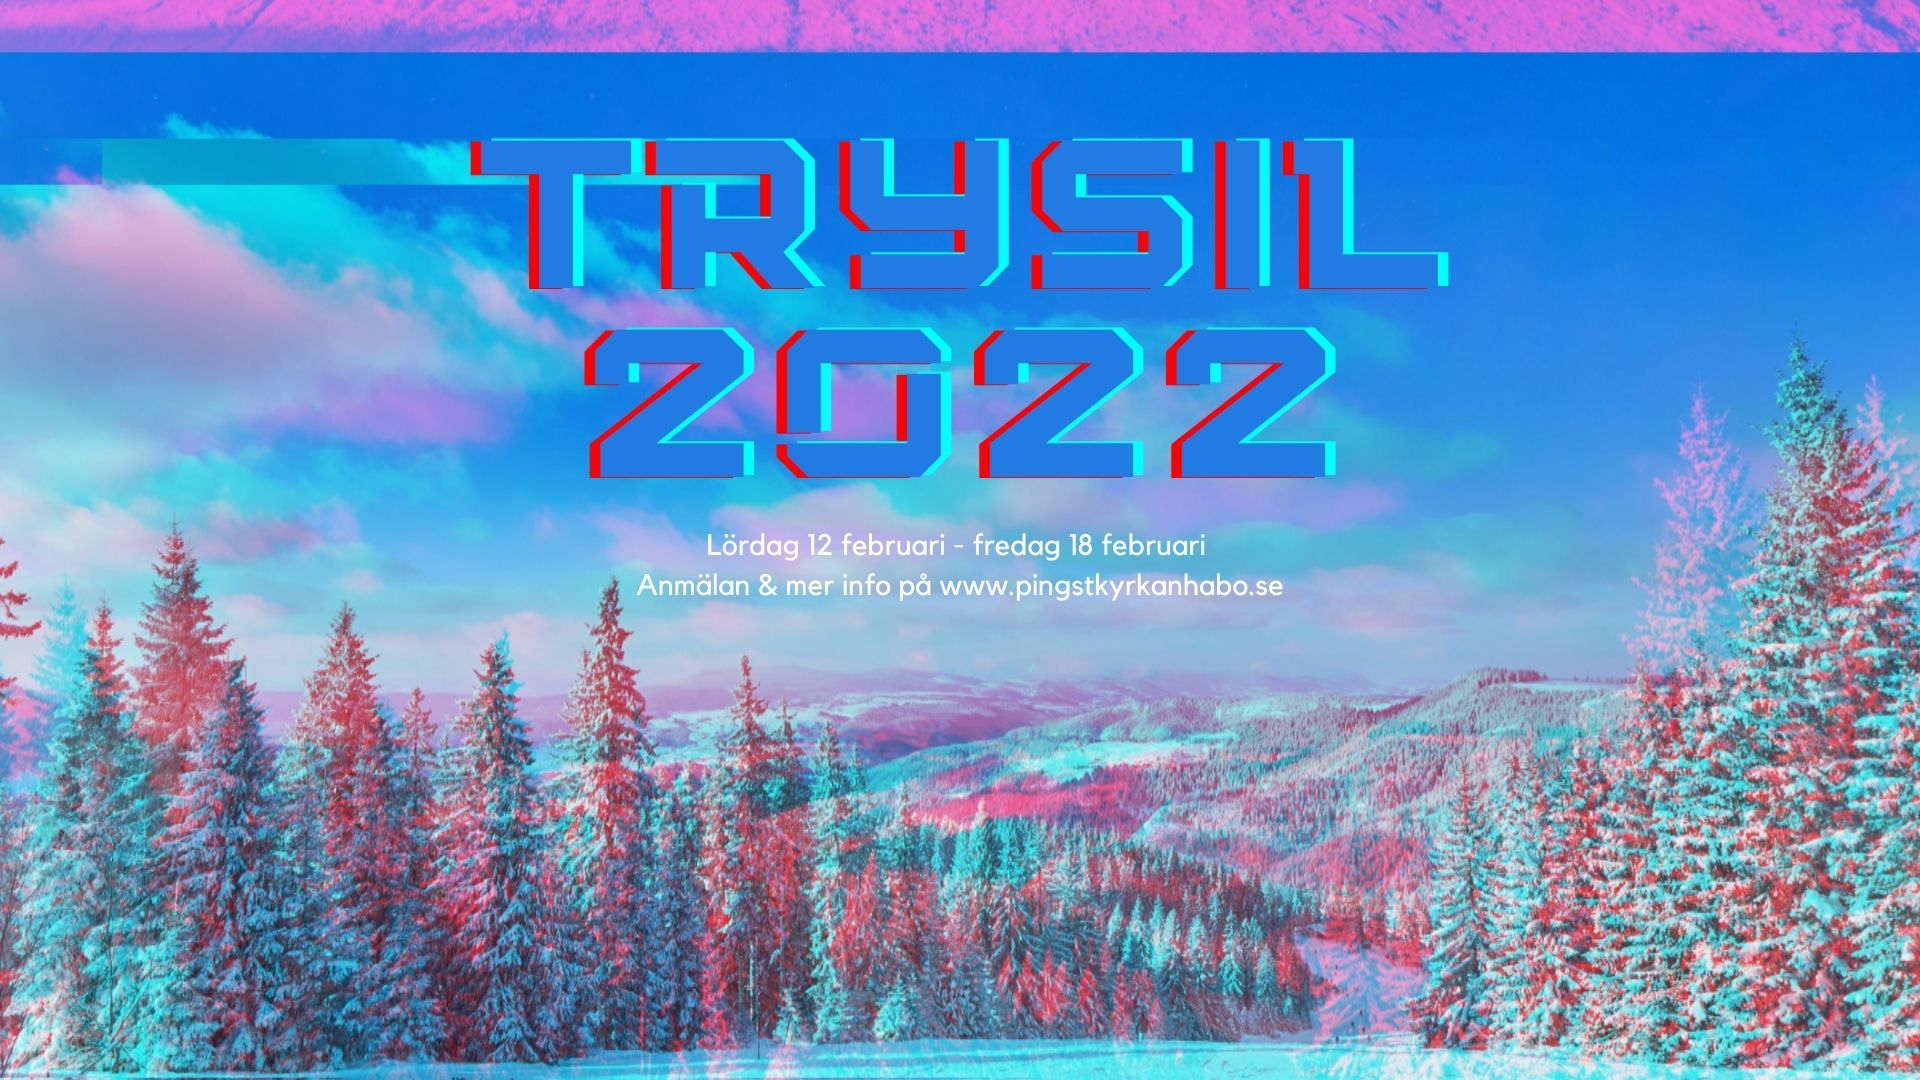 Trysil 2020